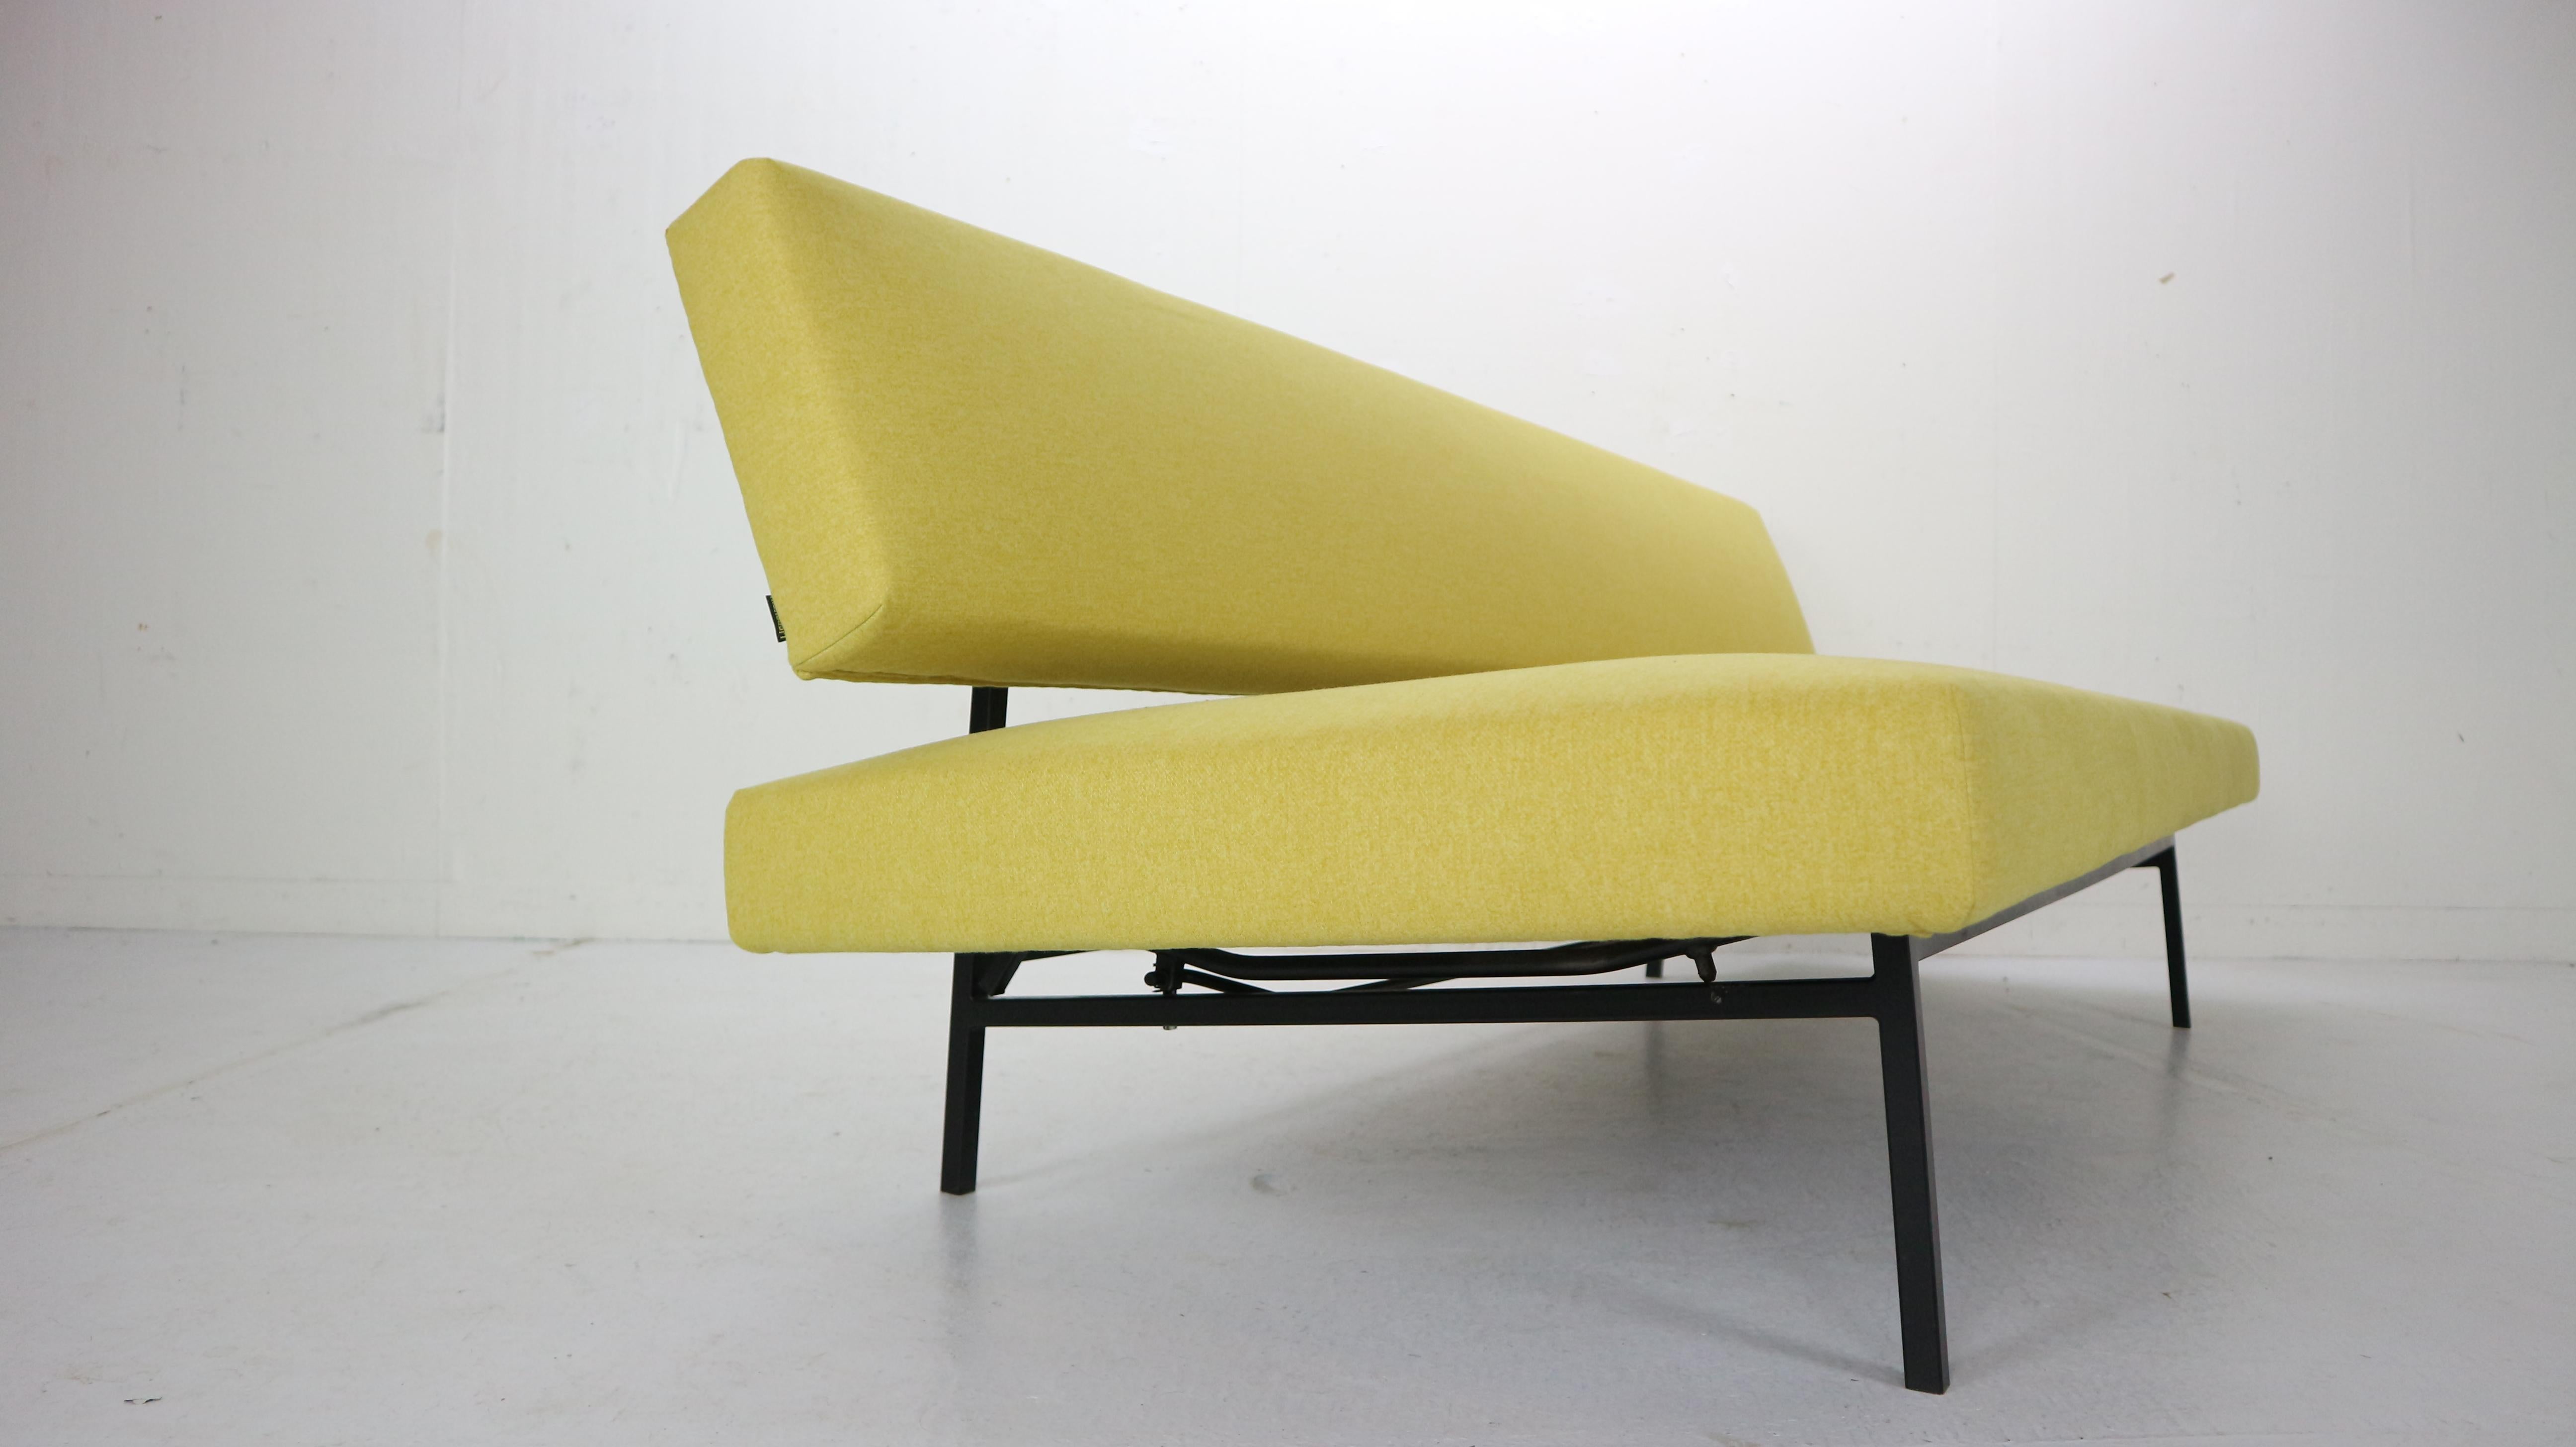 Metal Rob Parry Daybed Sleeper Sofa for Gederland, Dutch Modern Design, 1960s